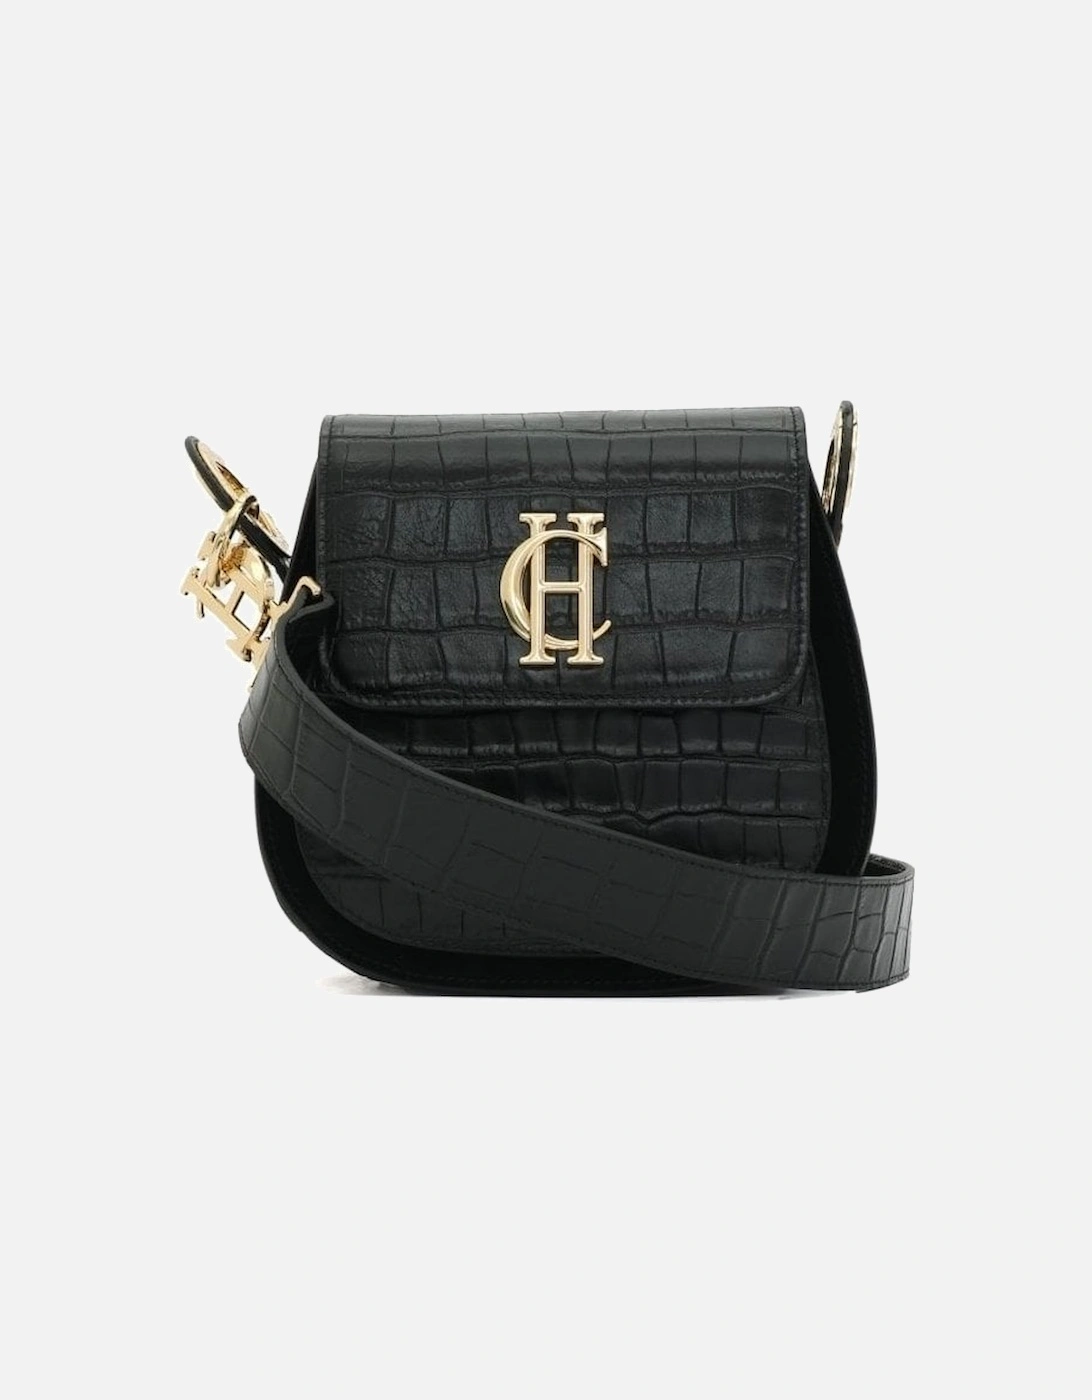 Chelsea Croc Black Saddle Bag